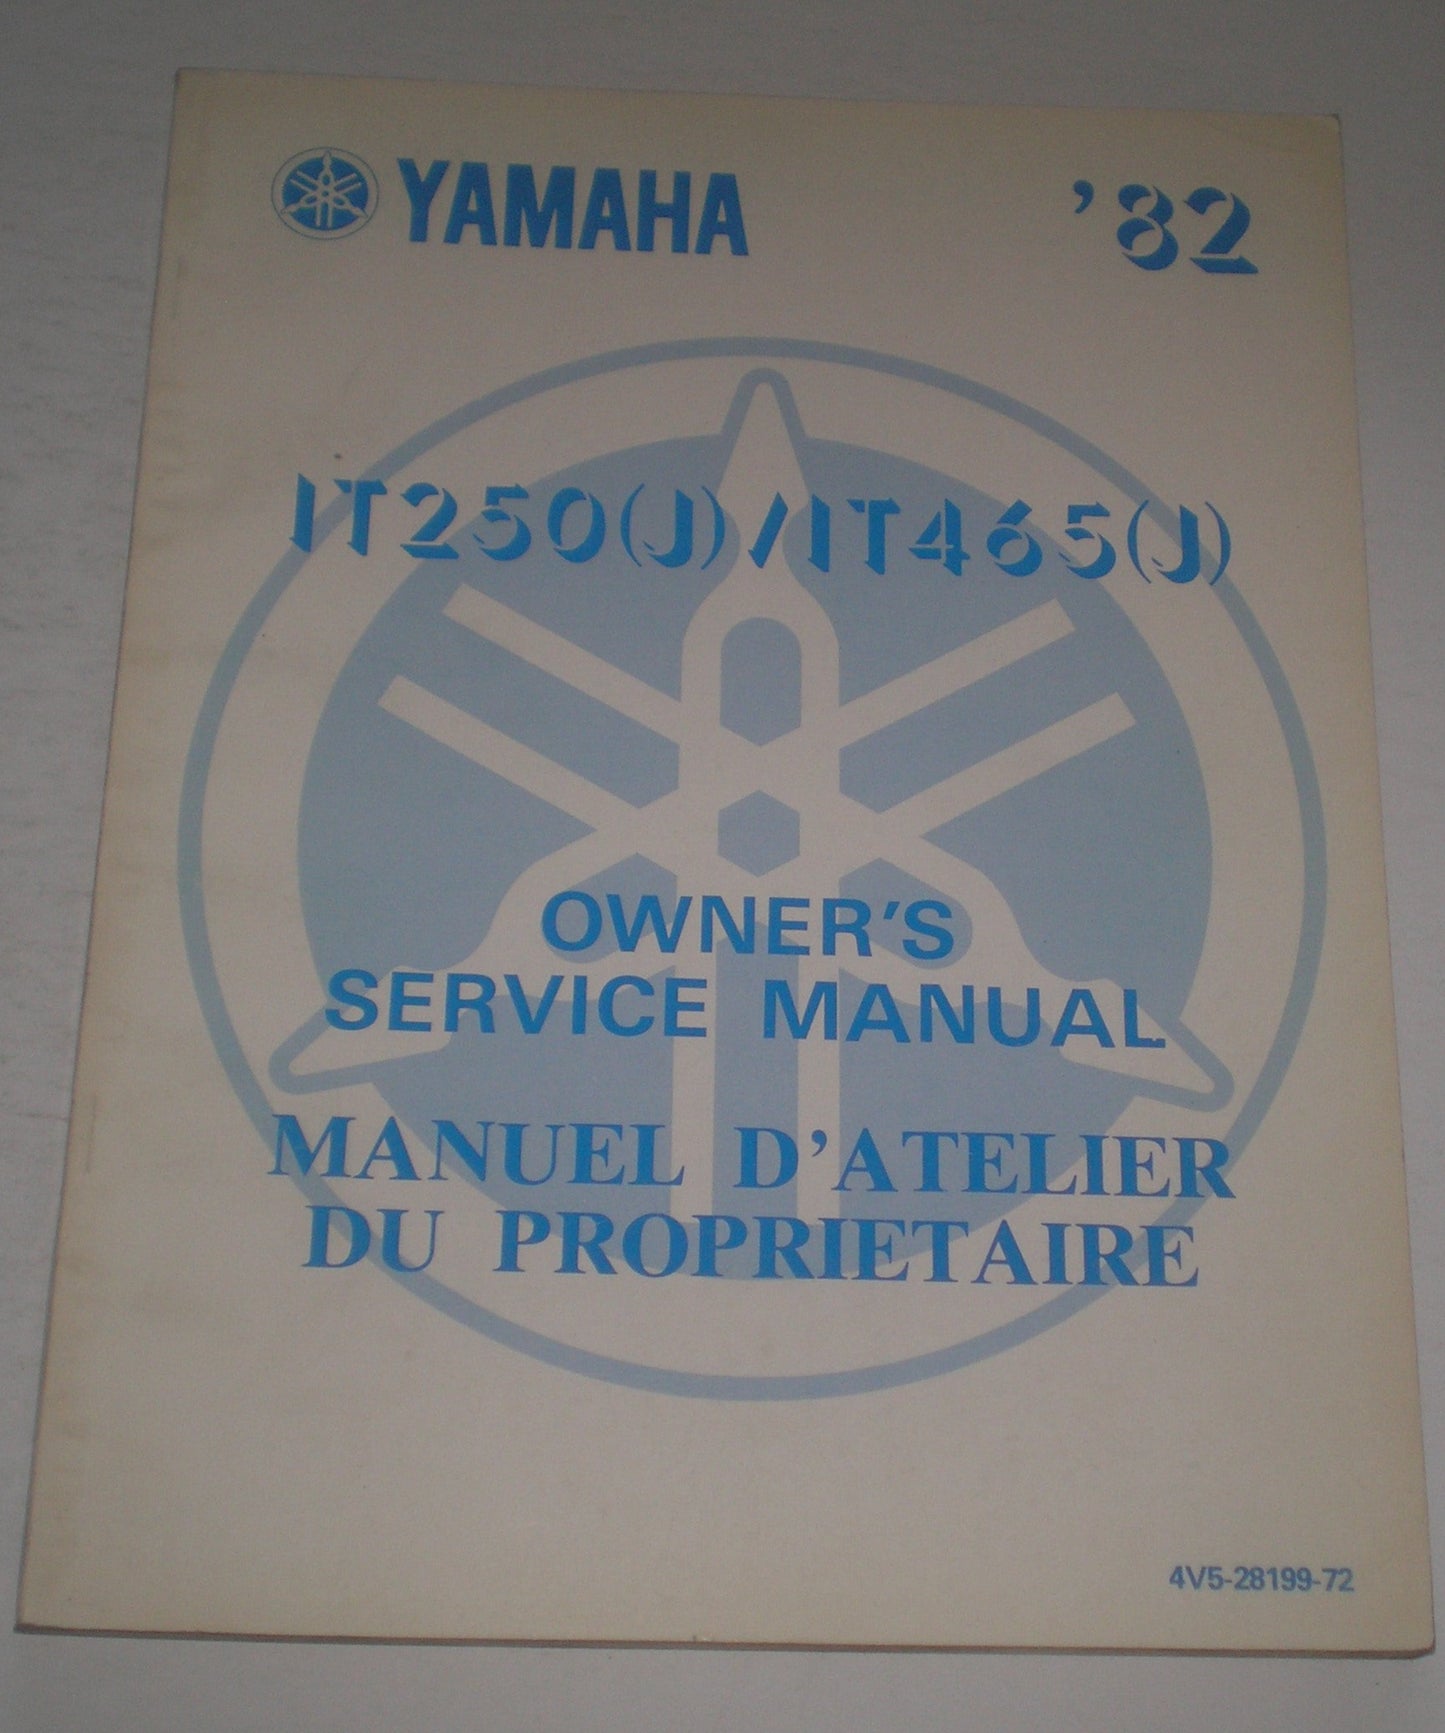 YAMAHA IT250J  IT465J  1982  Owner's Service Manual  4V5-28199-72  #1102